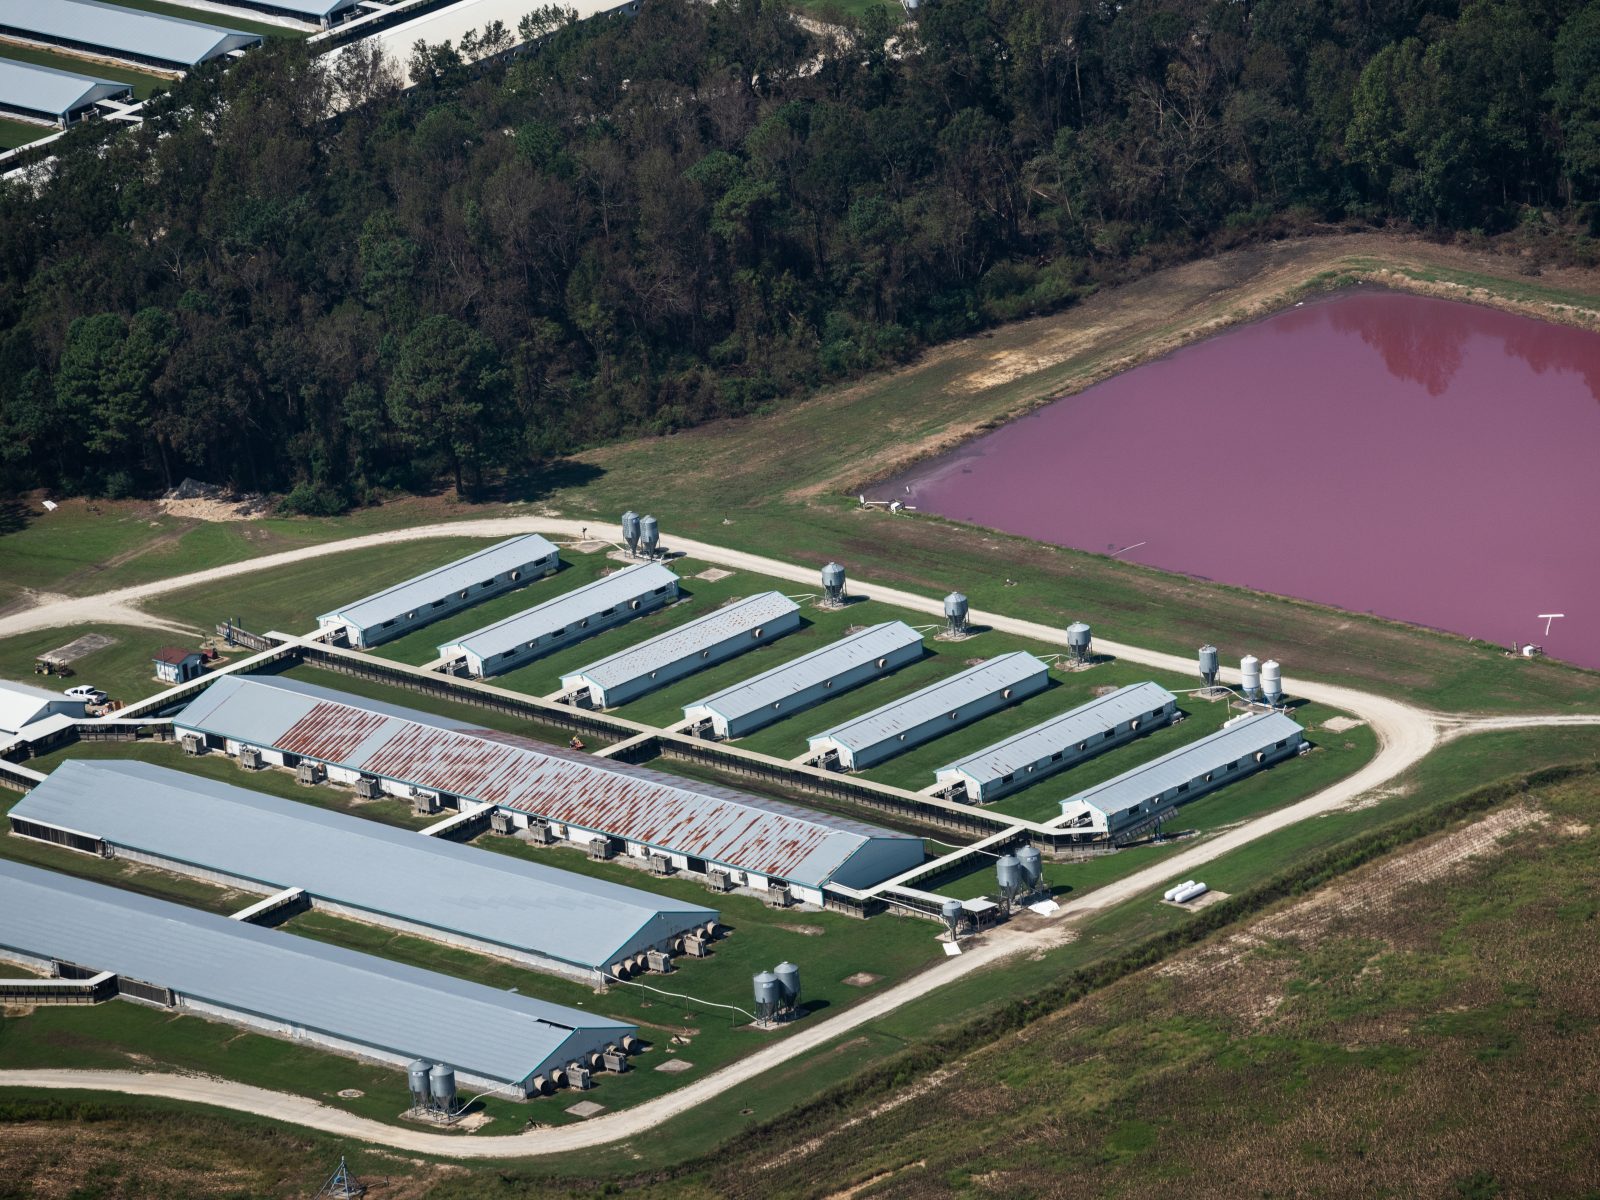 Aerial view of CAFO barns and manure lagoons in North Carolina